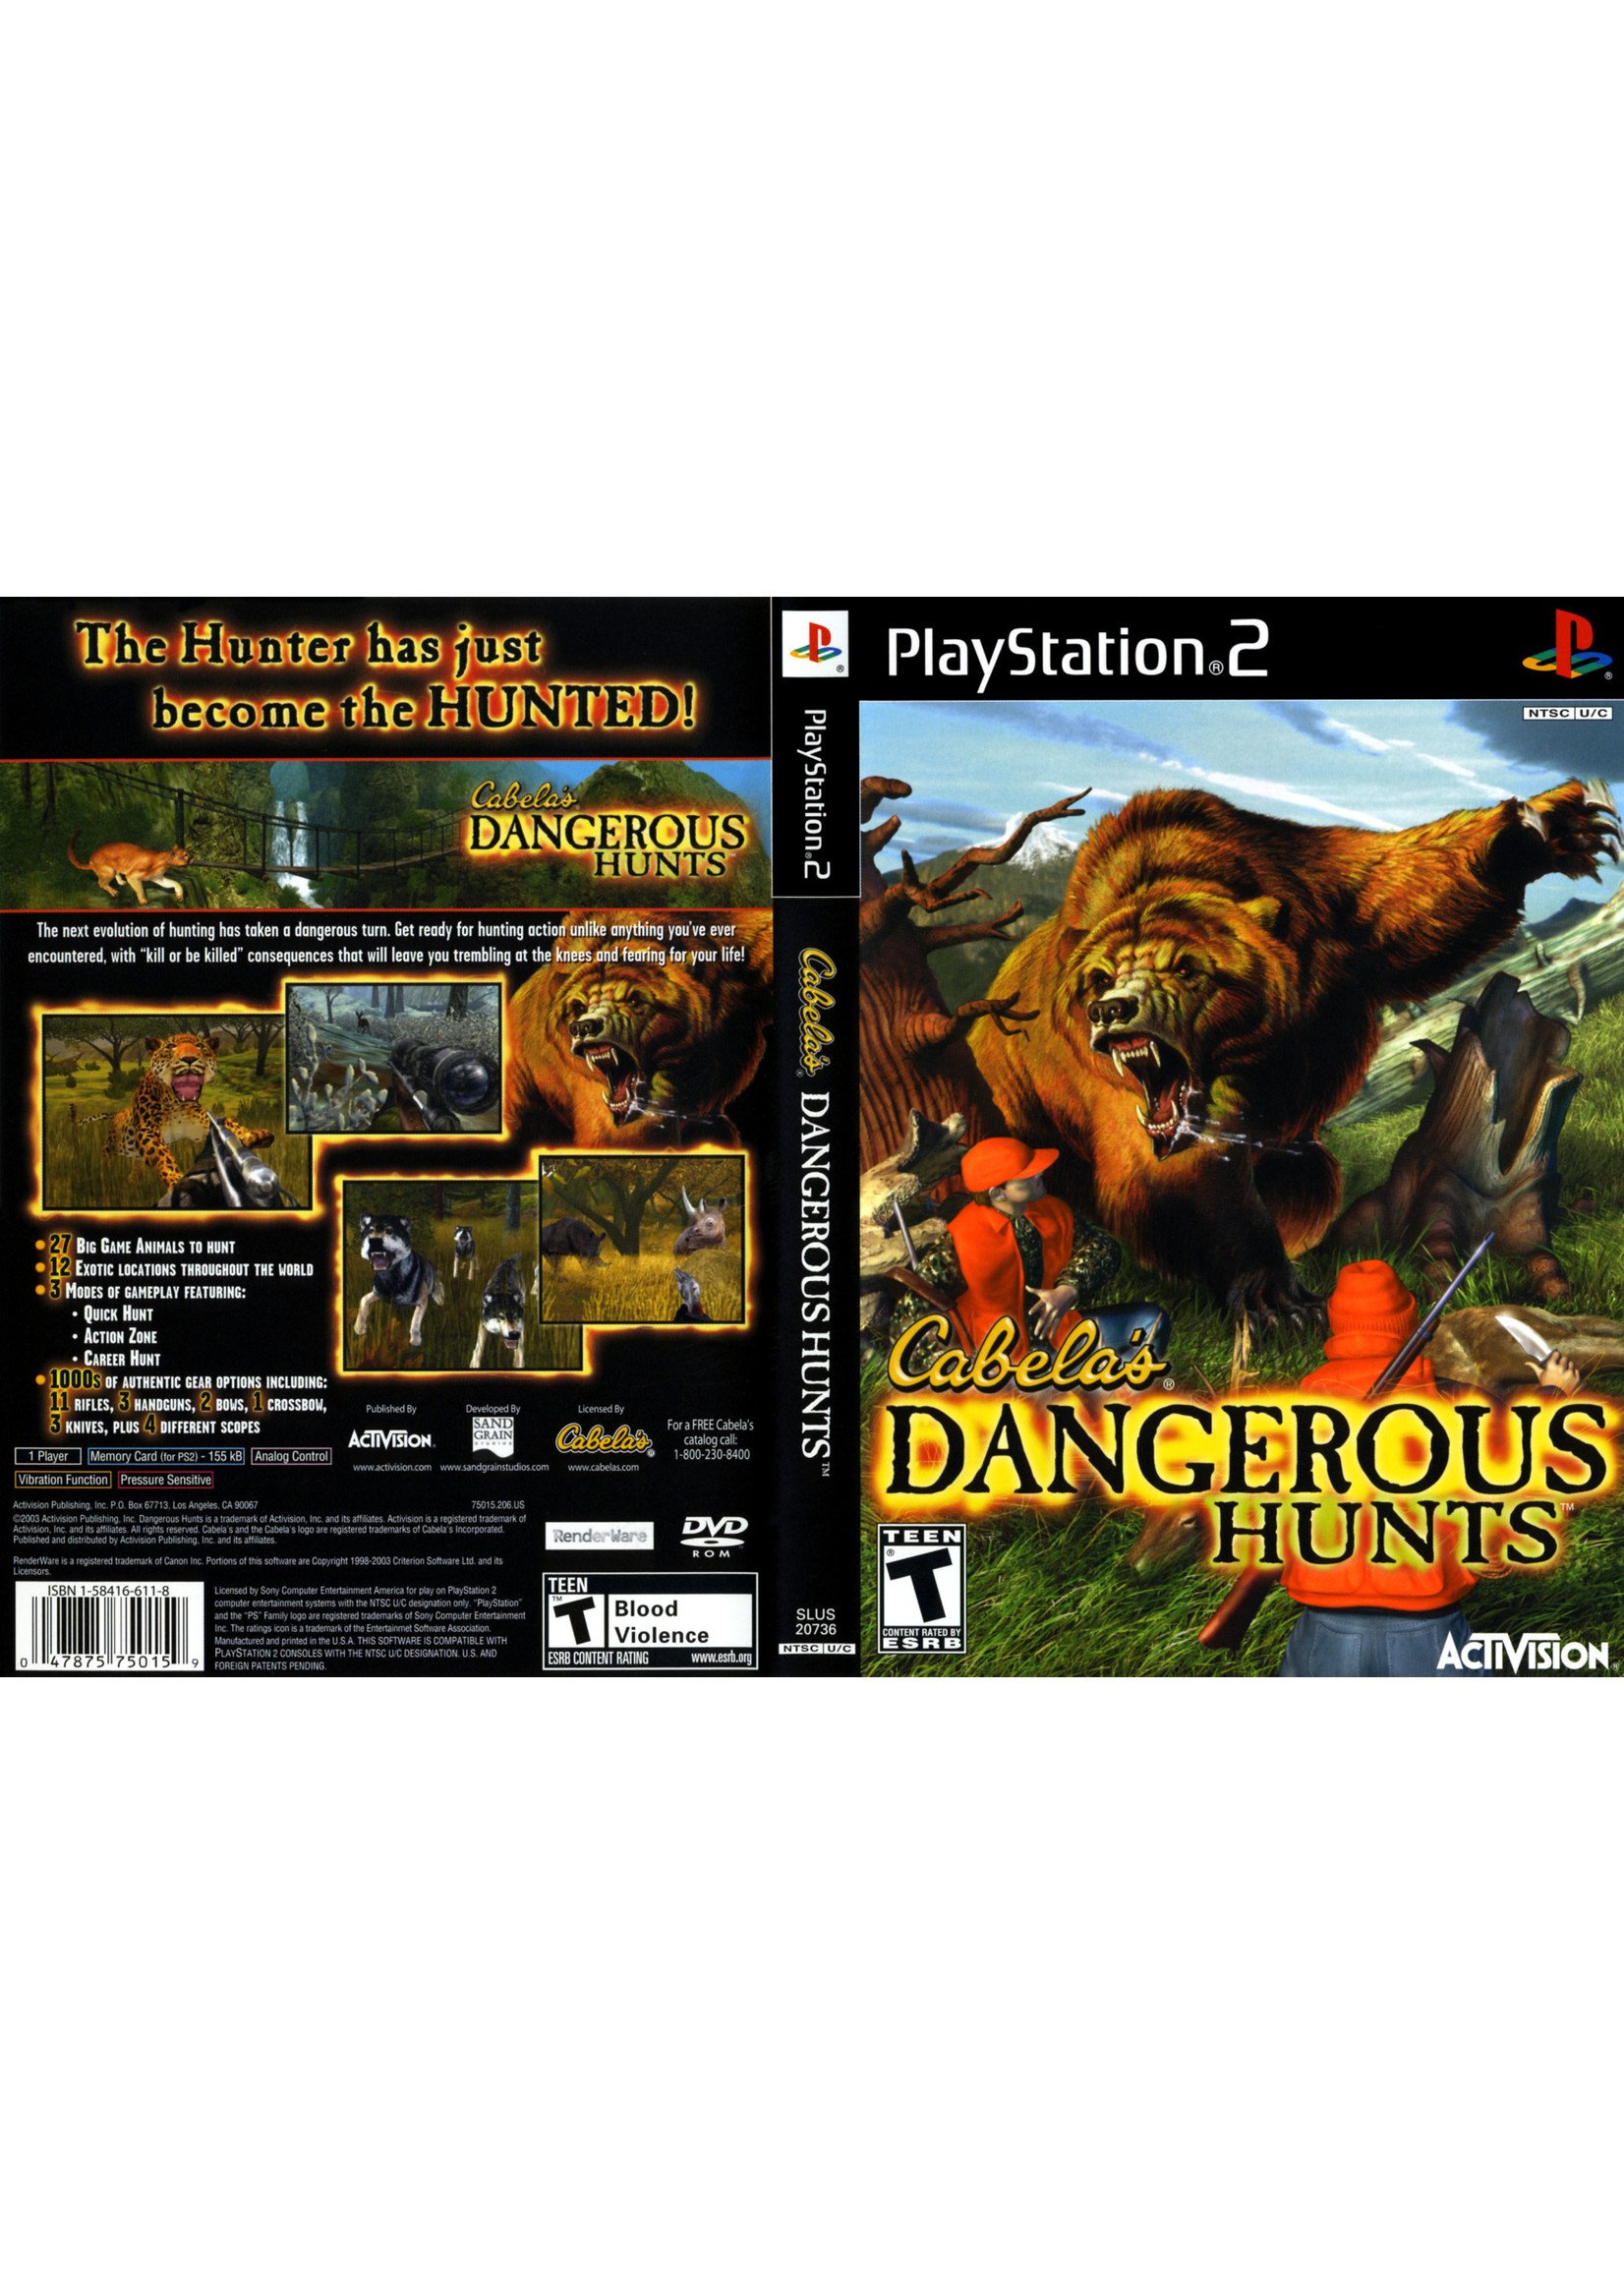 Sony Playstation 2 (PS2) Cabela's Dangerous Hunts